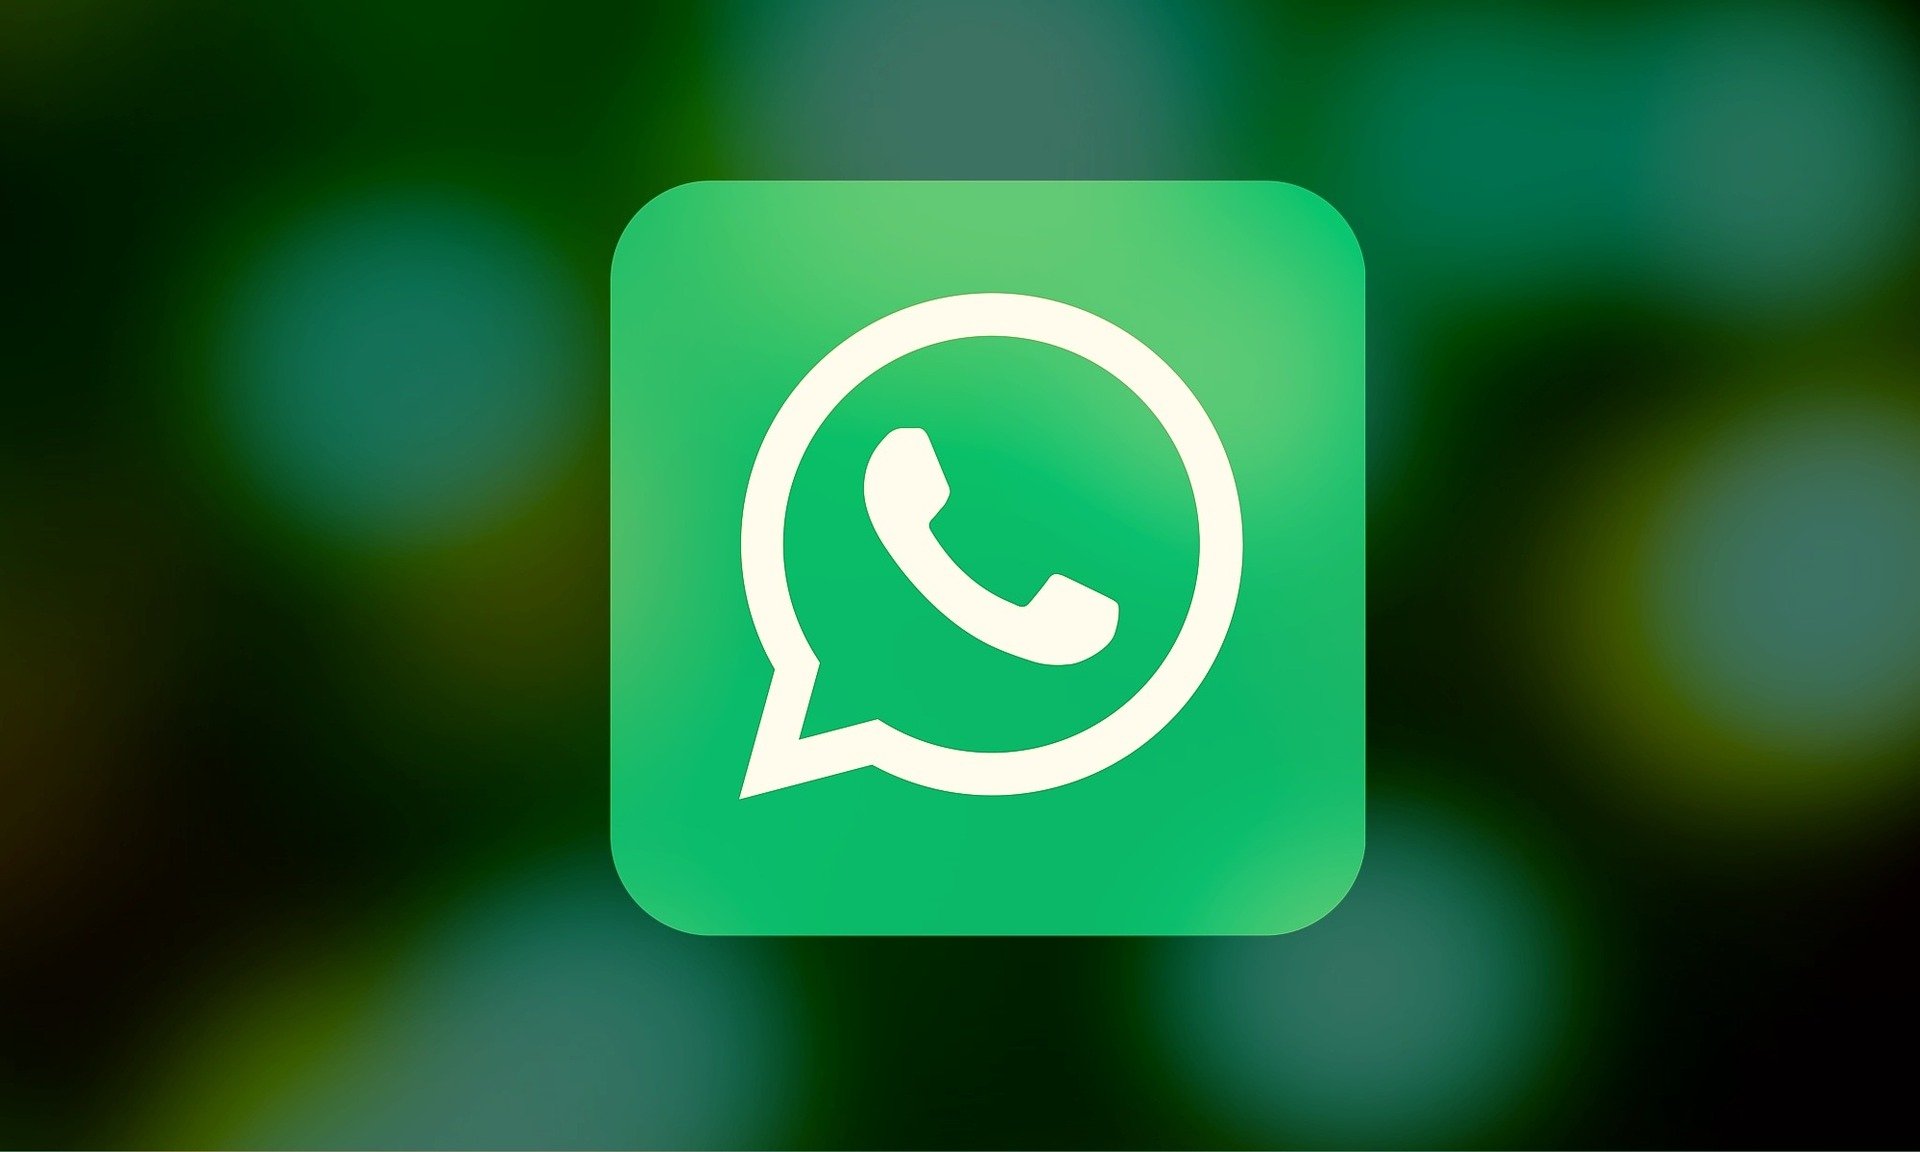 Proxy Whatsapp Fitur WA Baru Memungkinkan Kamu Chatting Tanpa Koneksi Internet